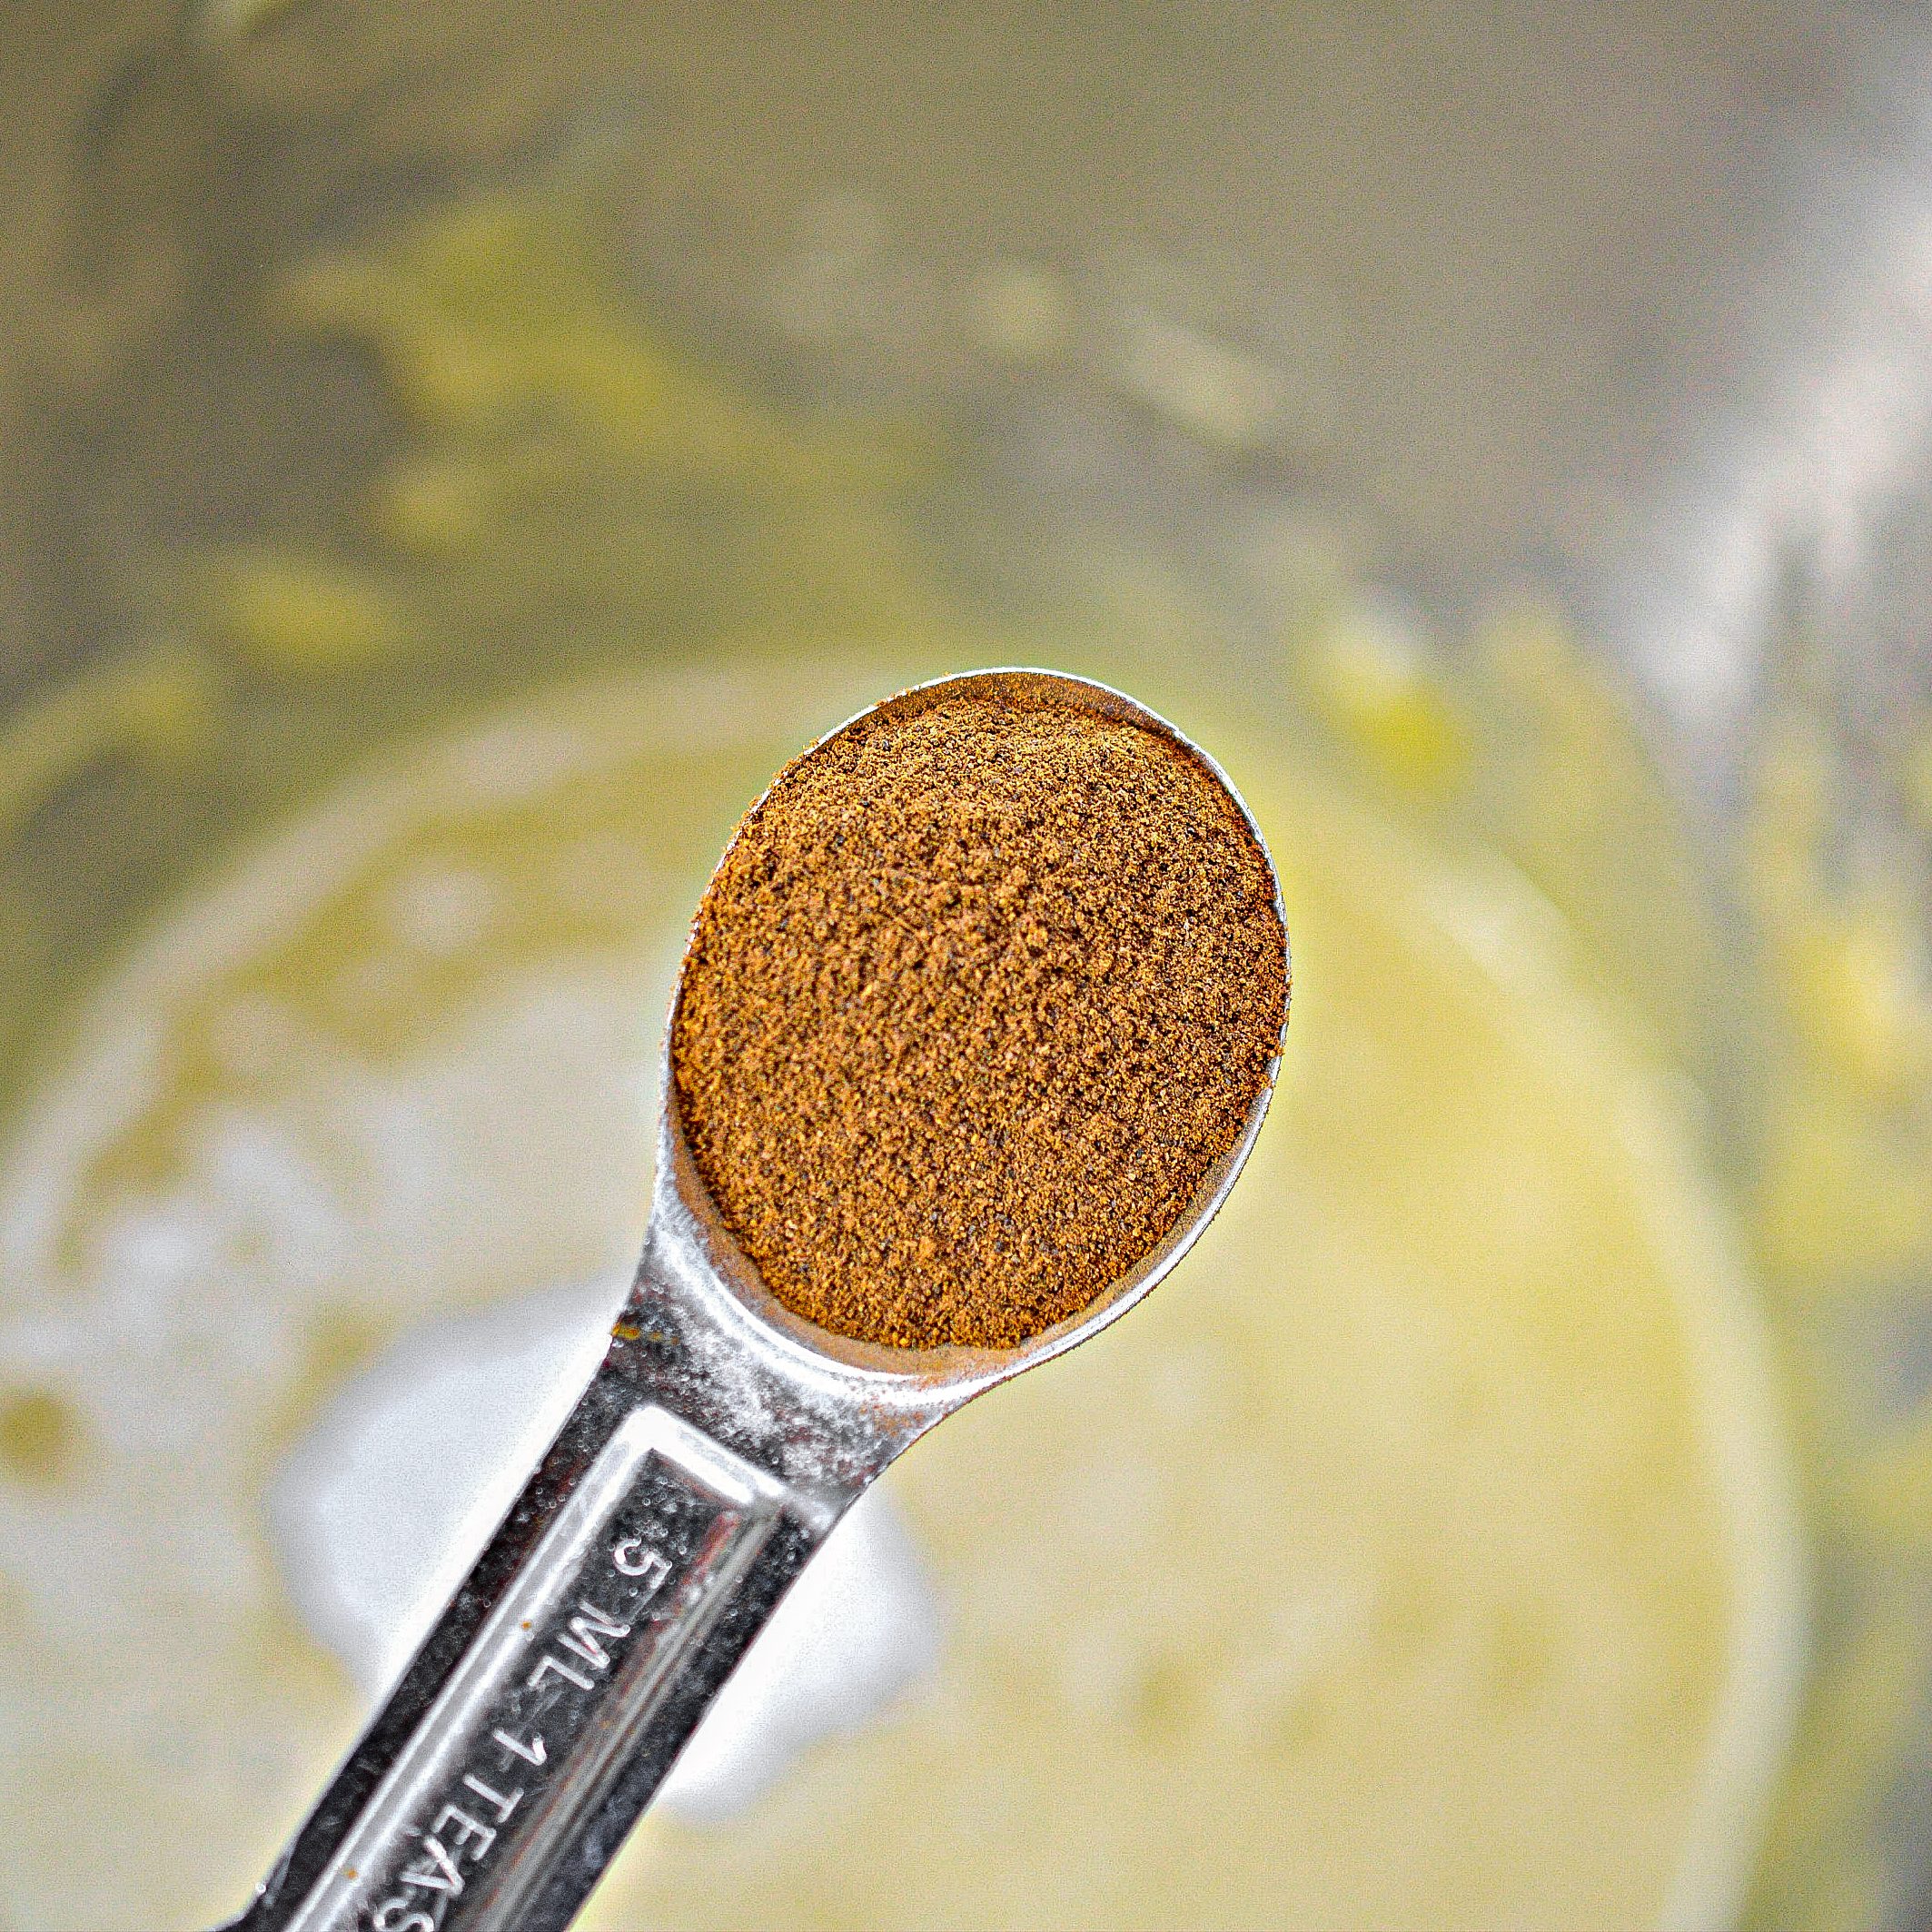 Mix the baking powder, nutmeg, cinnamon, salt, and vanilla into the batter.